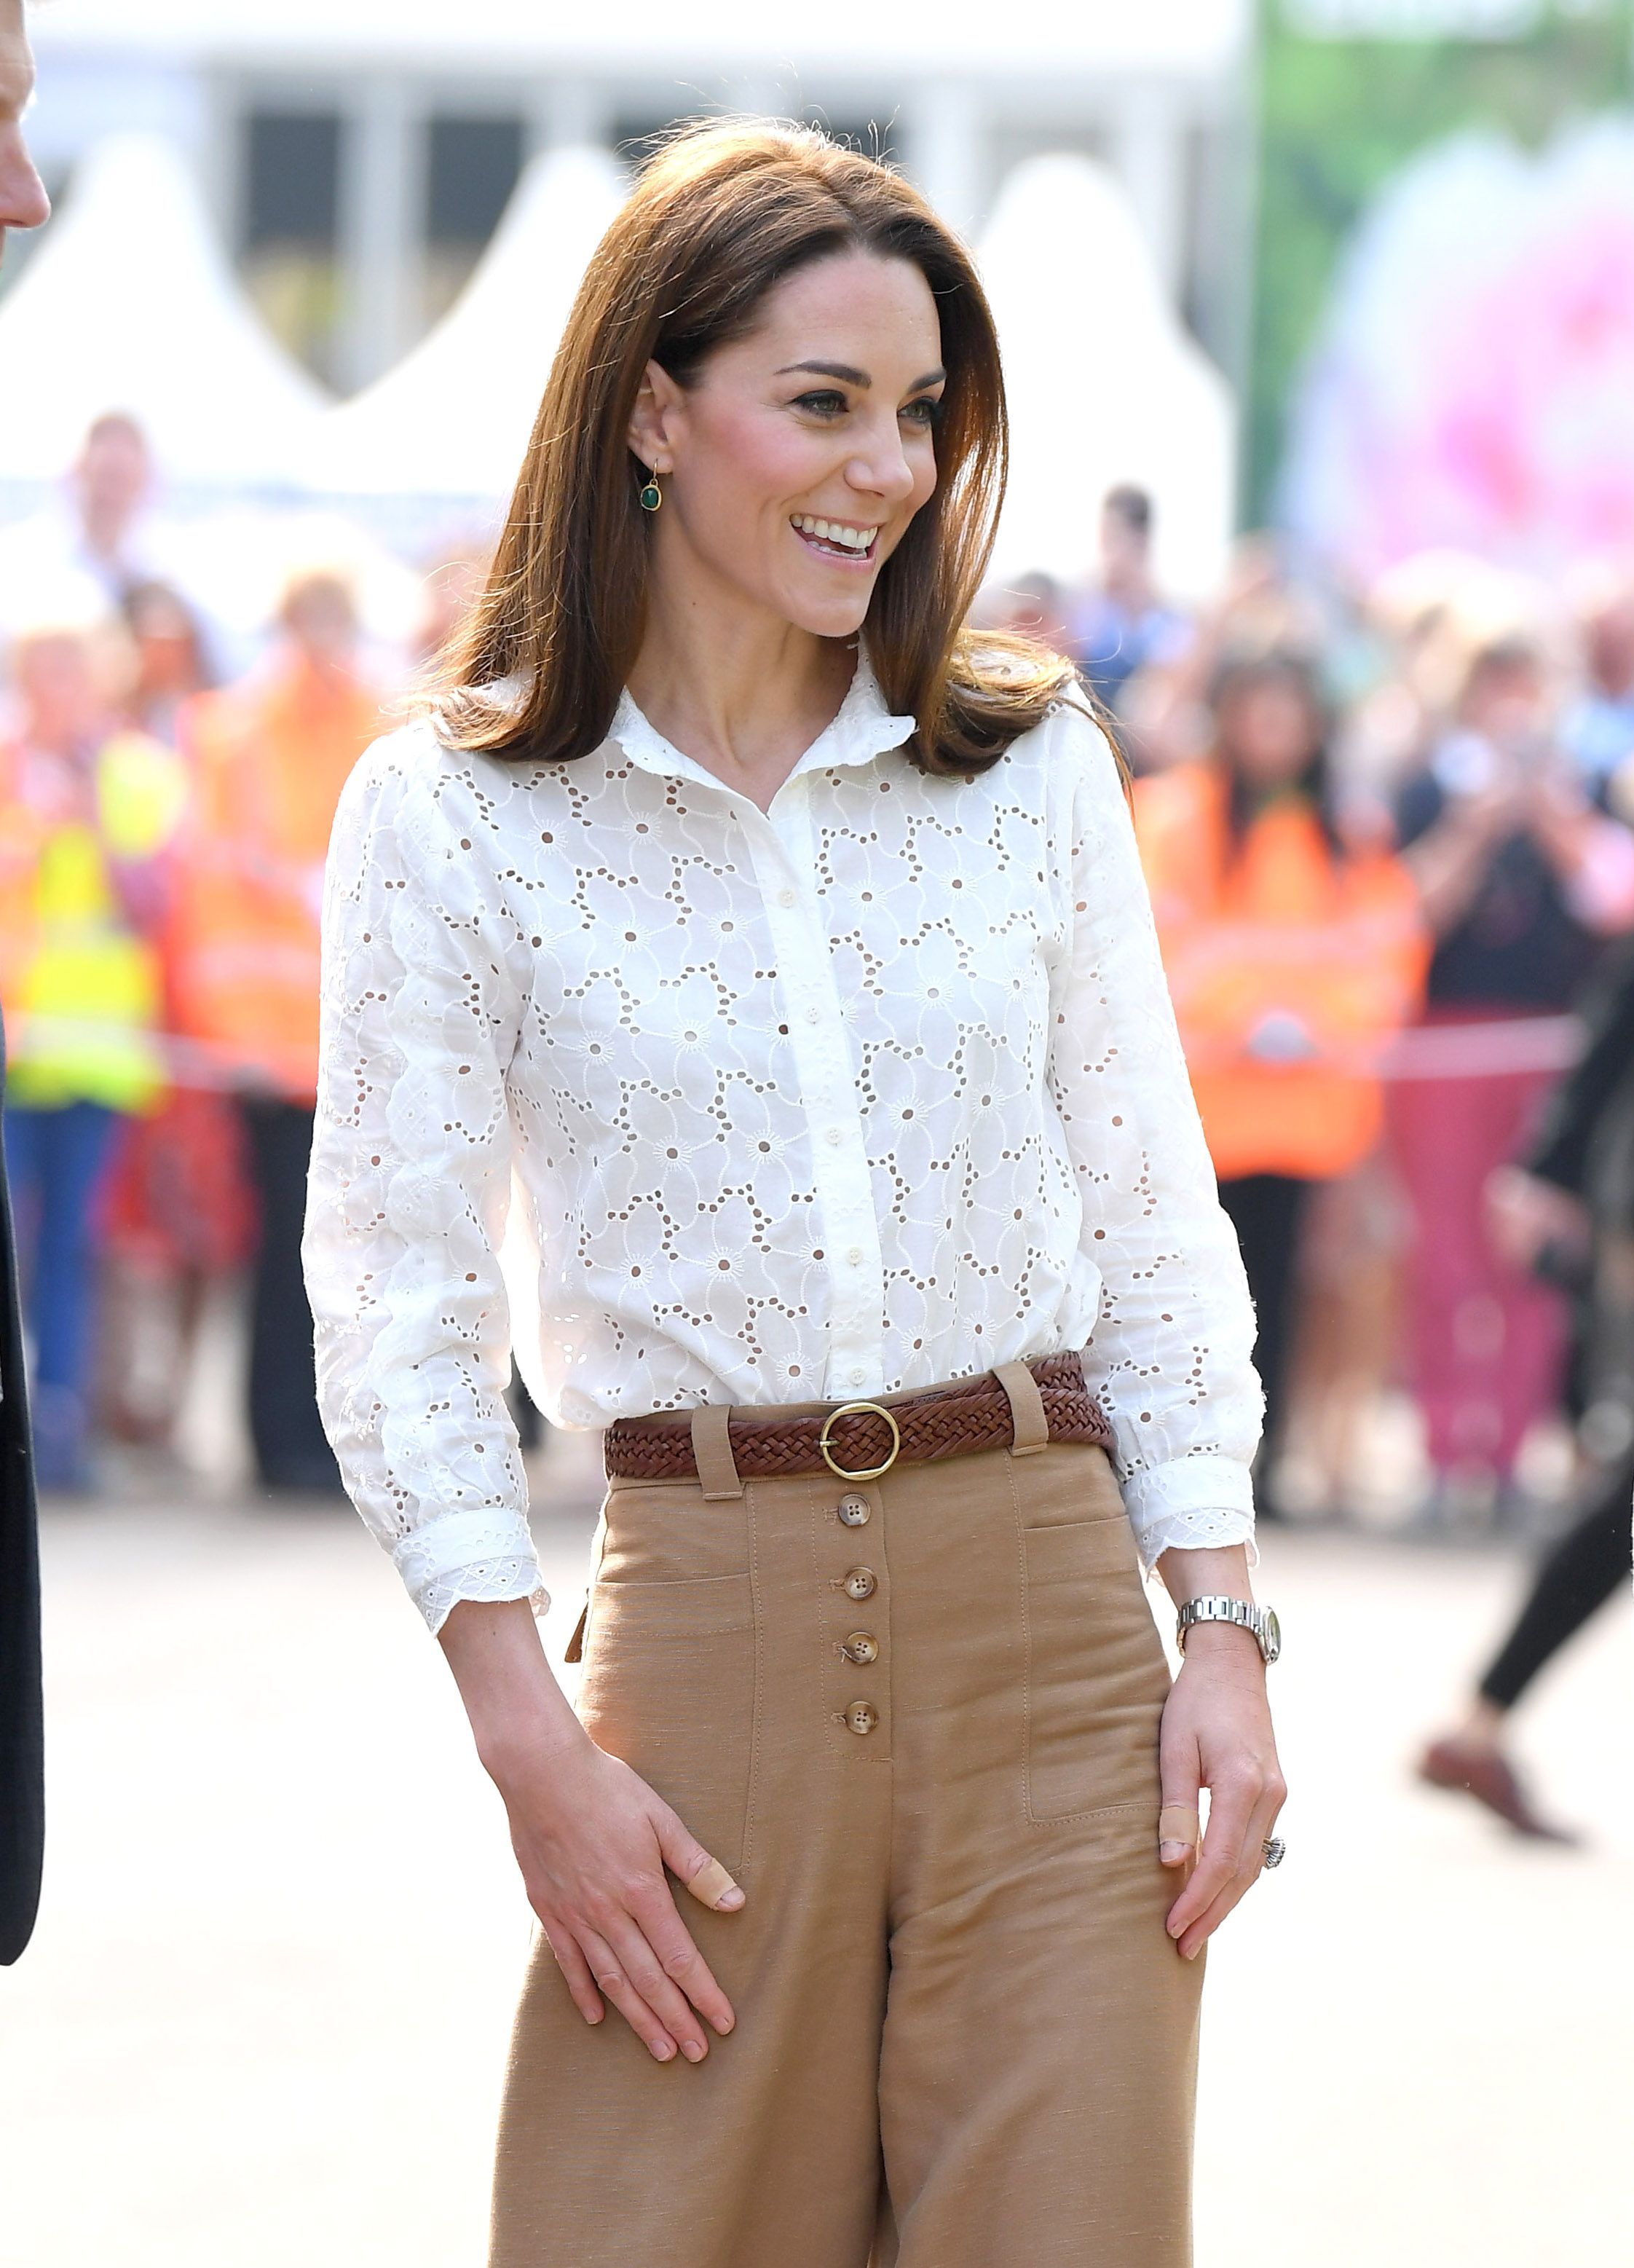 Longchamp 'Le Pliage' Tote (medium)-Kate Middleton - Dress Like A Duchess